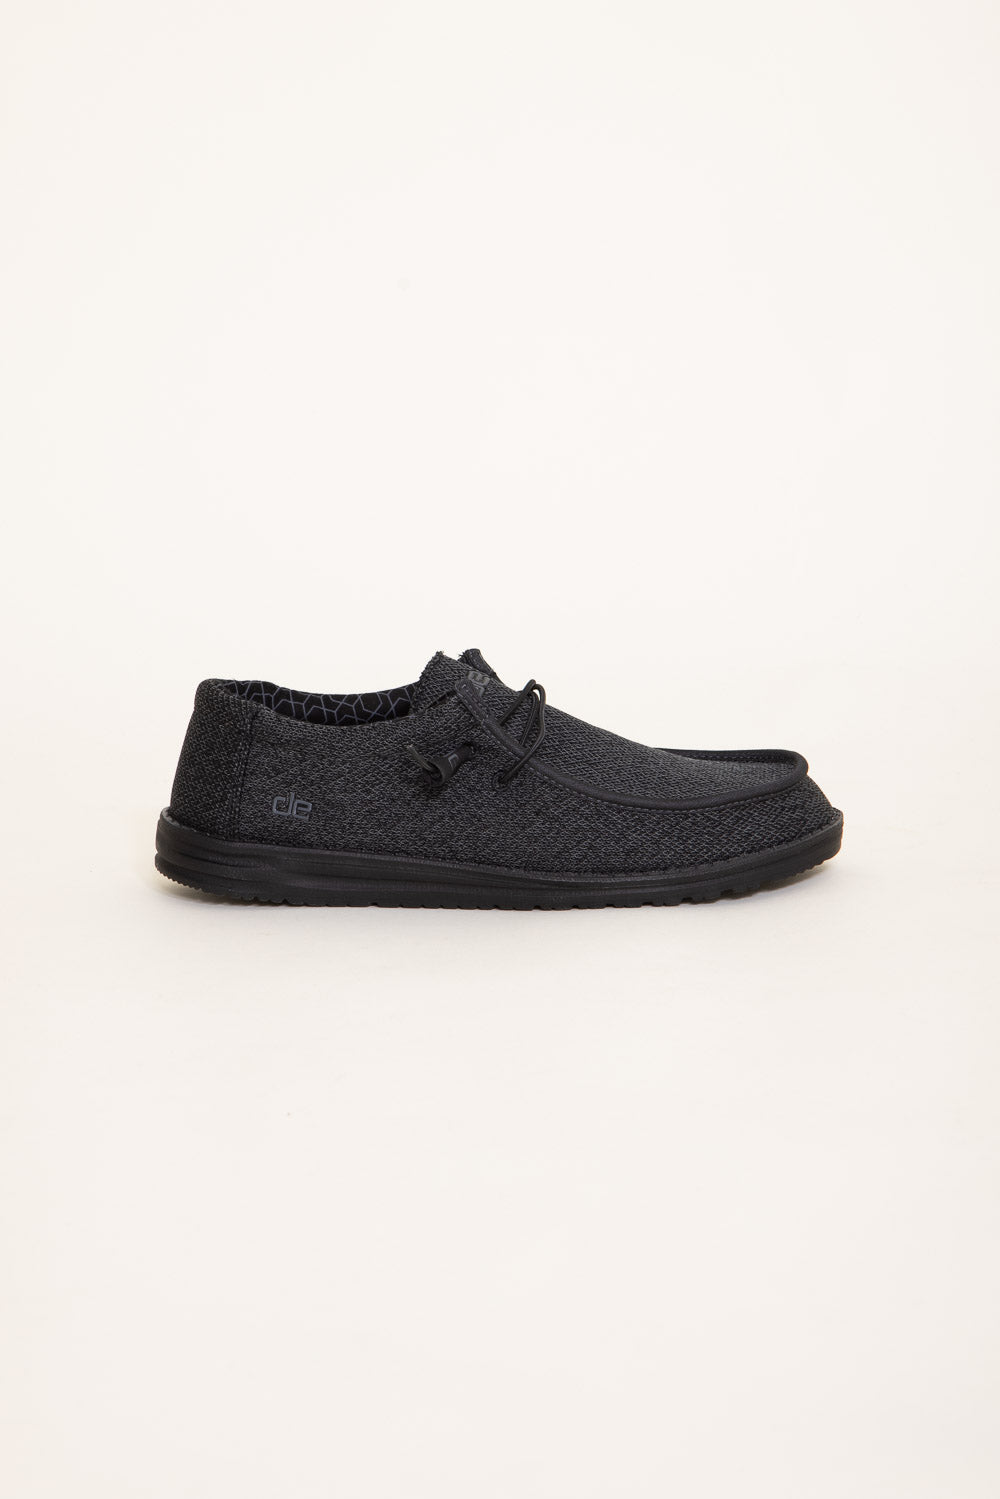 HEYDUDE Men's Wally Sox Shoes in Black/White – Glik's